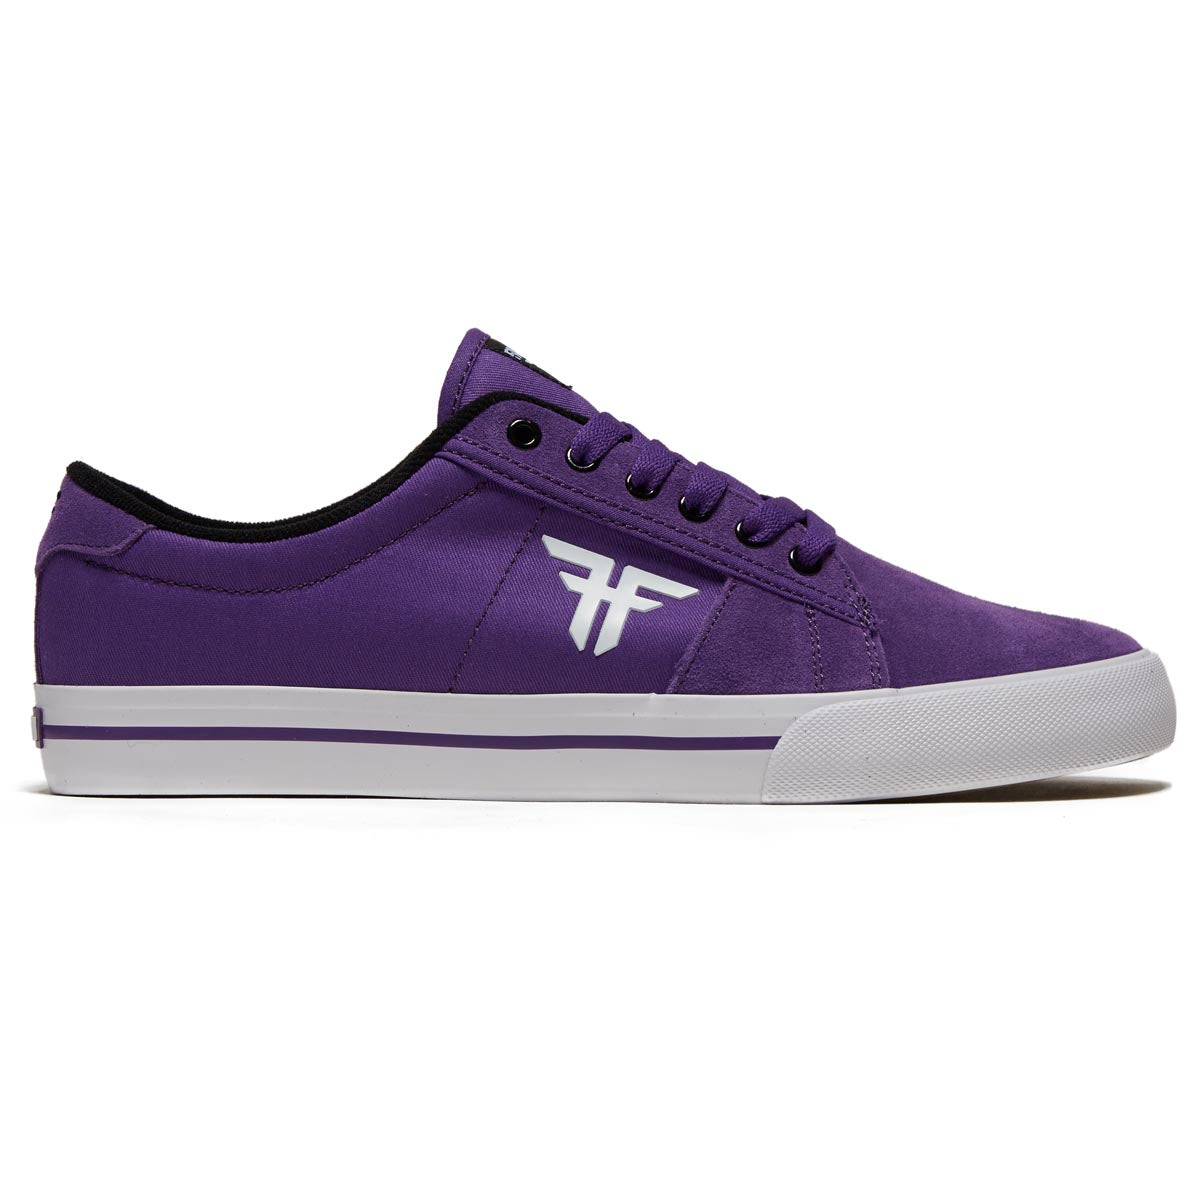 Fallen Bomber Shoes - Purple/White image 1